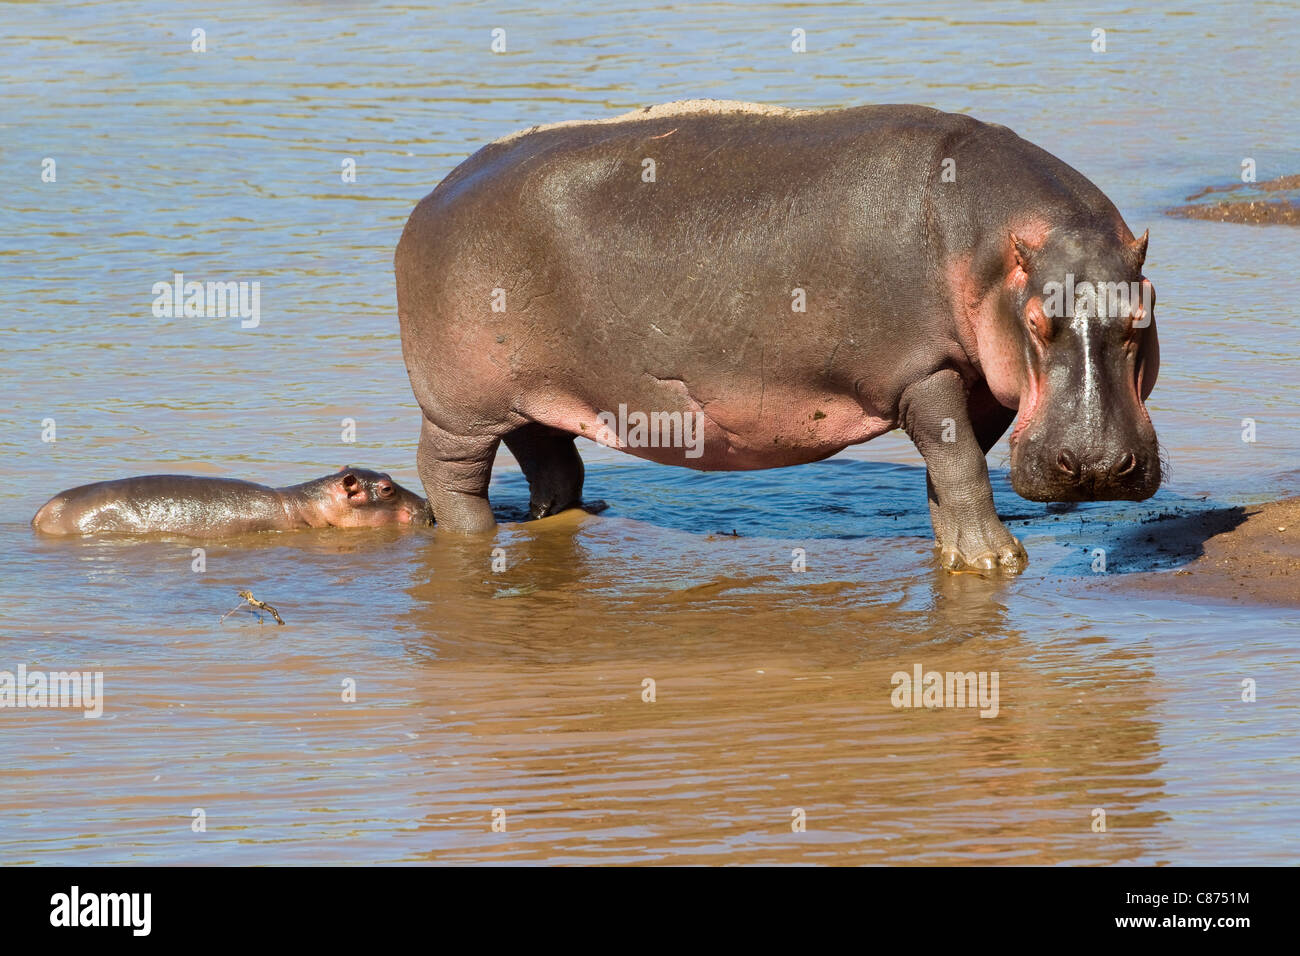 Hippopotamus, Masai Mara National Reserve, Kenya Banque D'Images